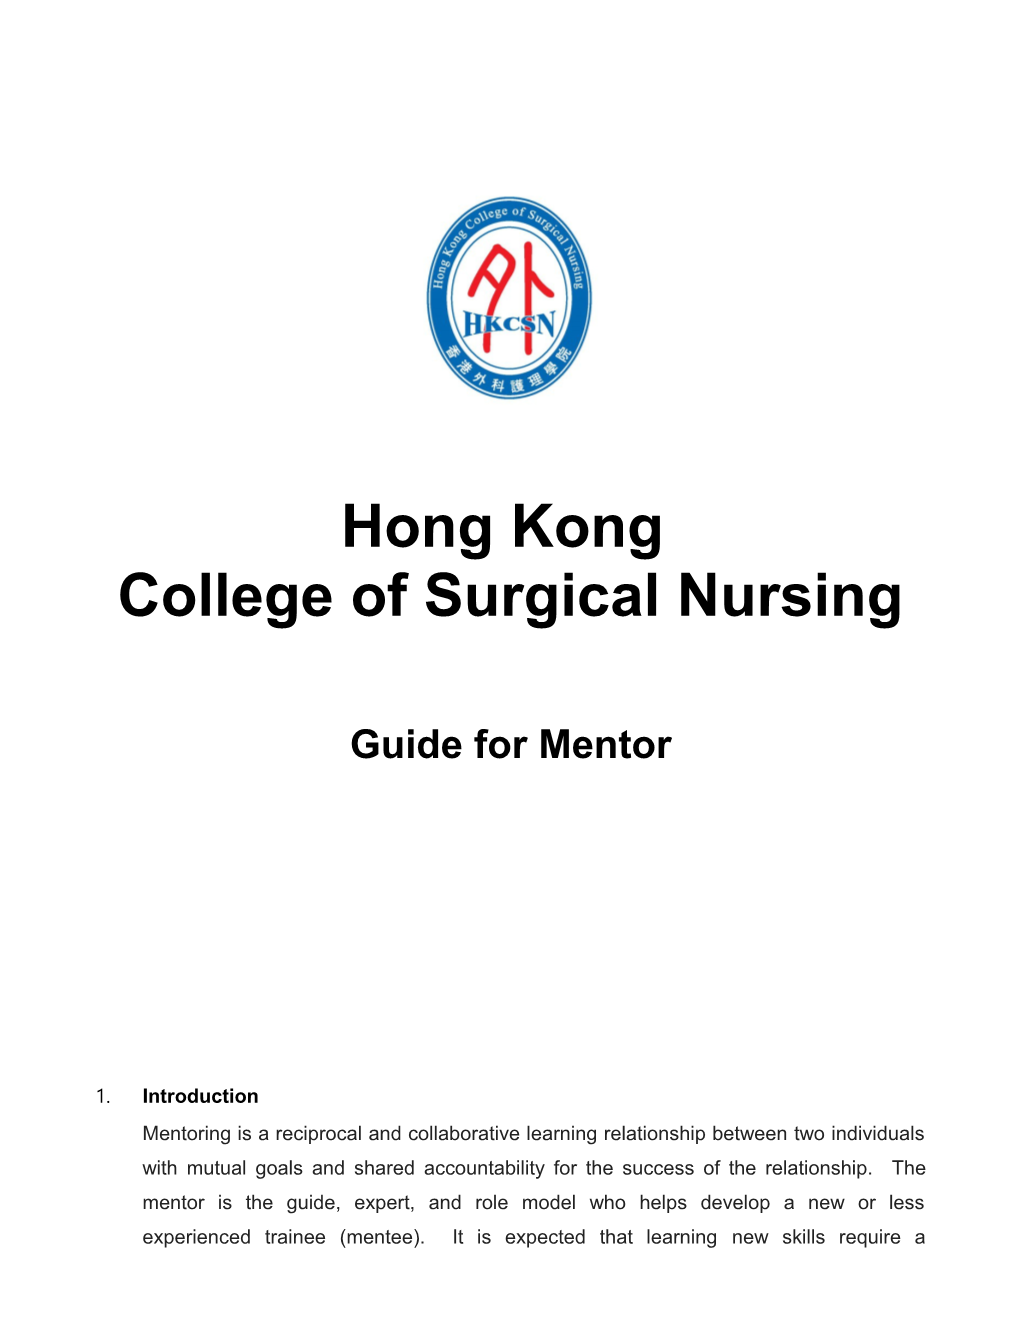 College of Surgical Nursing